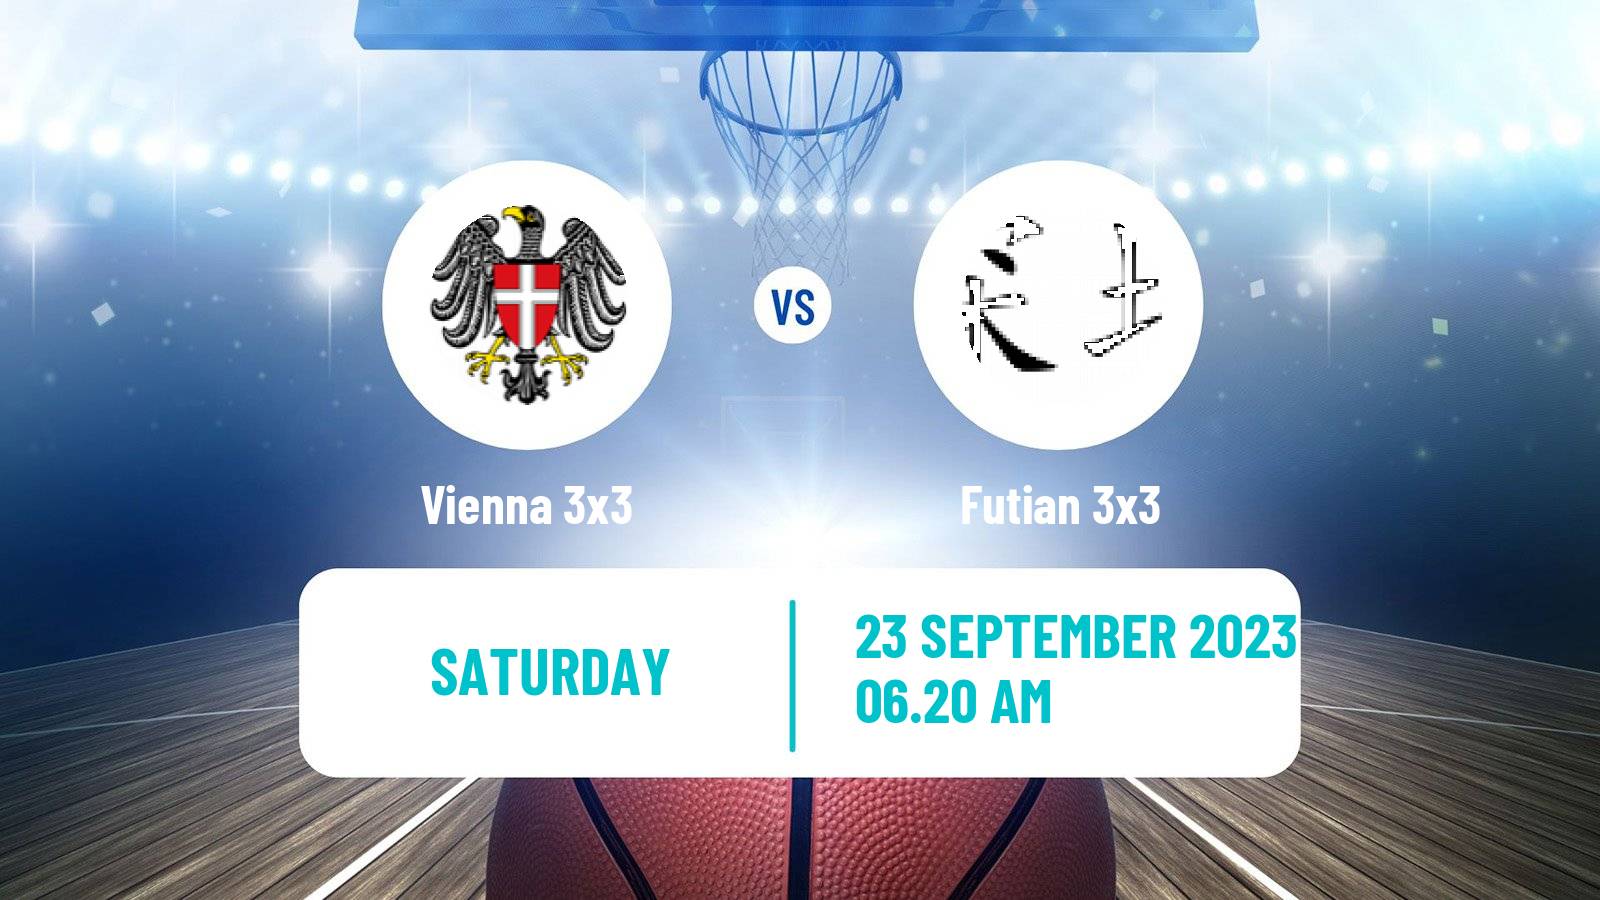 Basketball World Tour Сebu 3x3 Vienna 3x3 - Futian 3x3